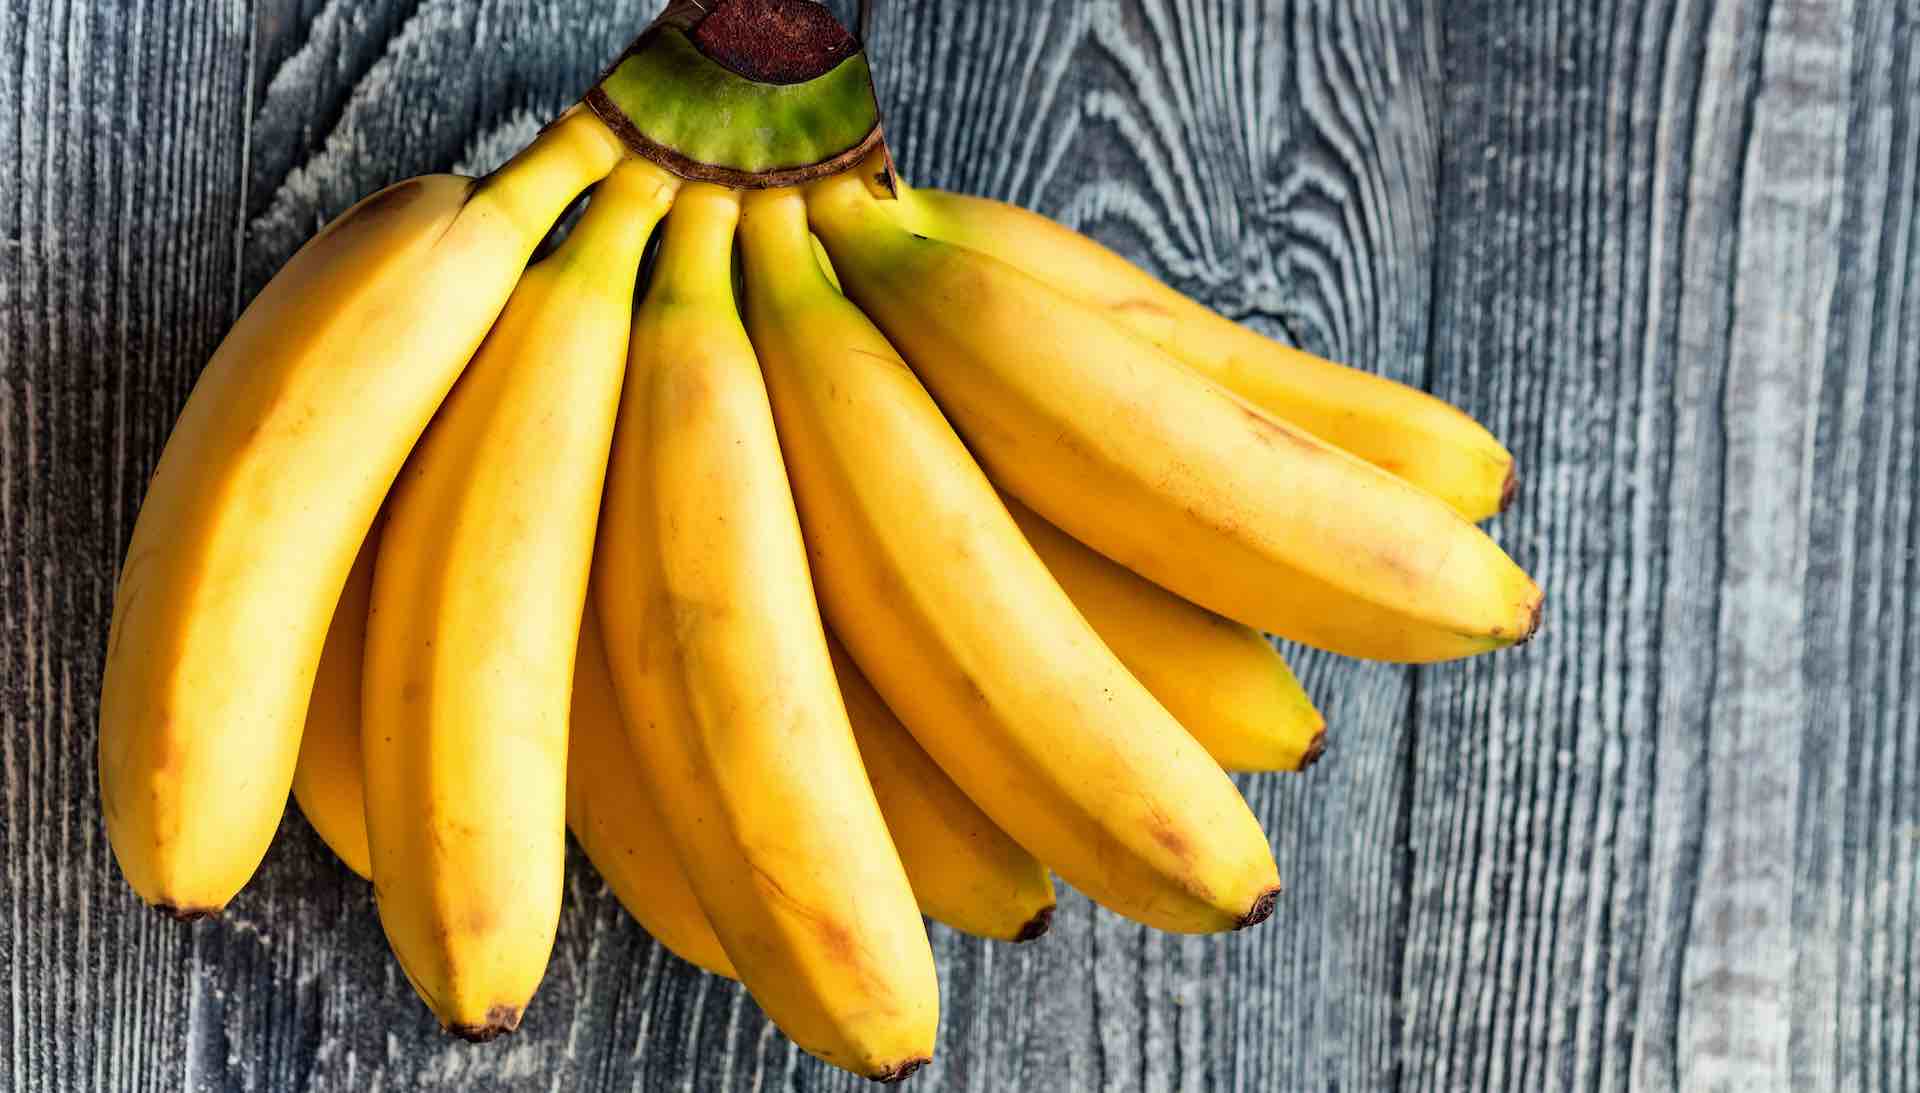 Tasty solution - bananas lower blood pressure